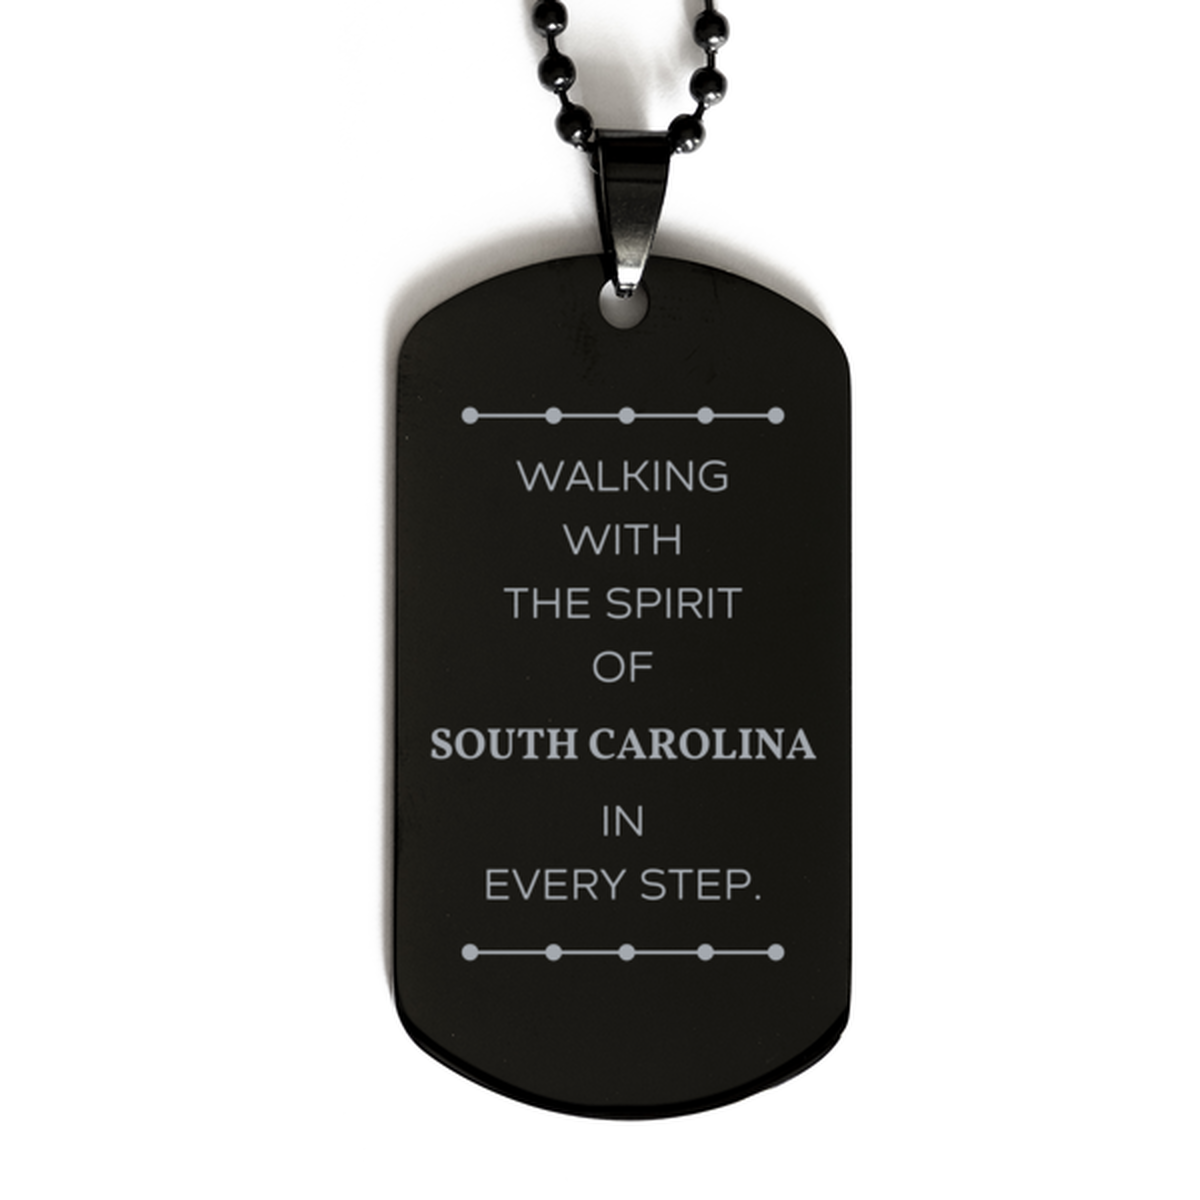 South Carolina Gifts, Walking with the spirit, Love South Carolina Birthday Christmas Black Dog Tag For South Carolina People, Men, Women, Friends